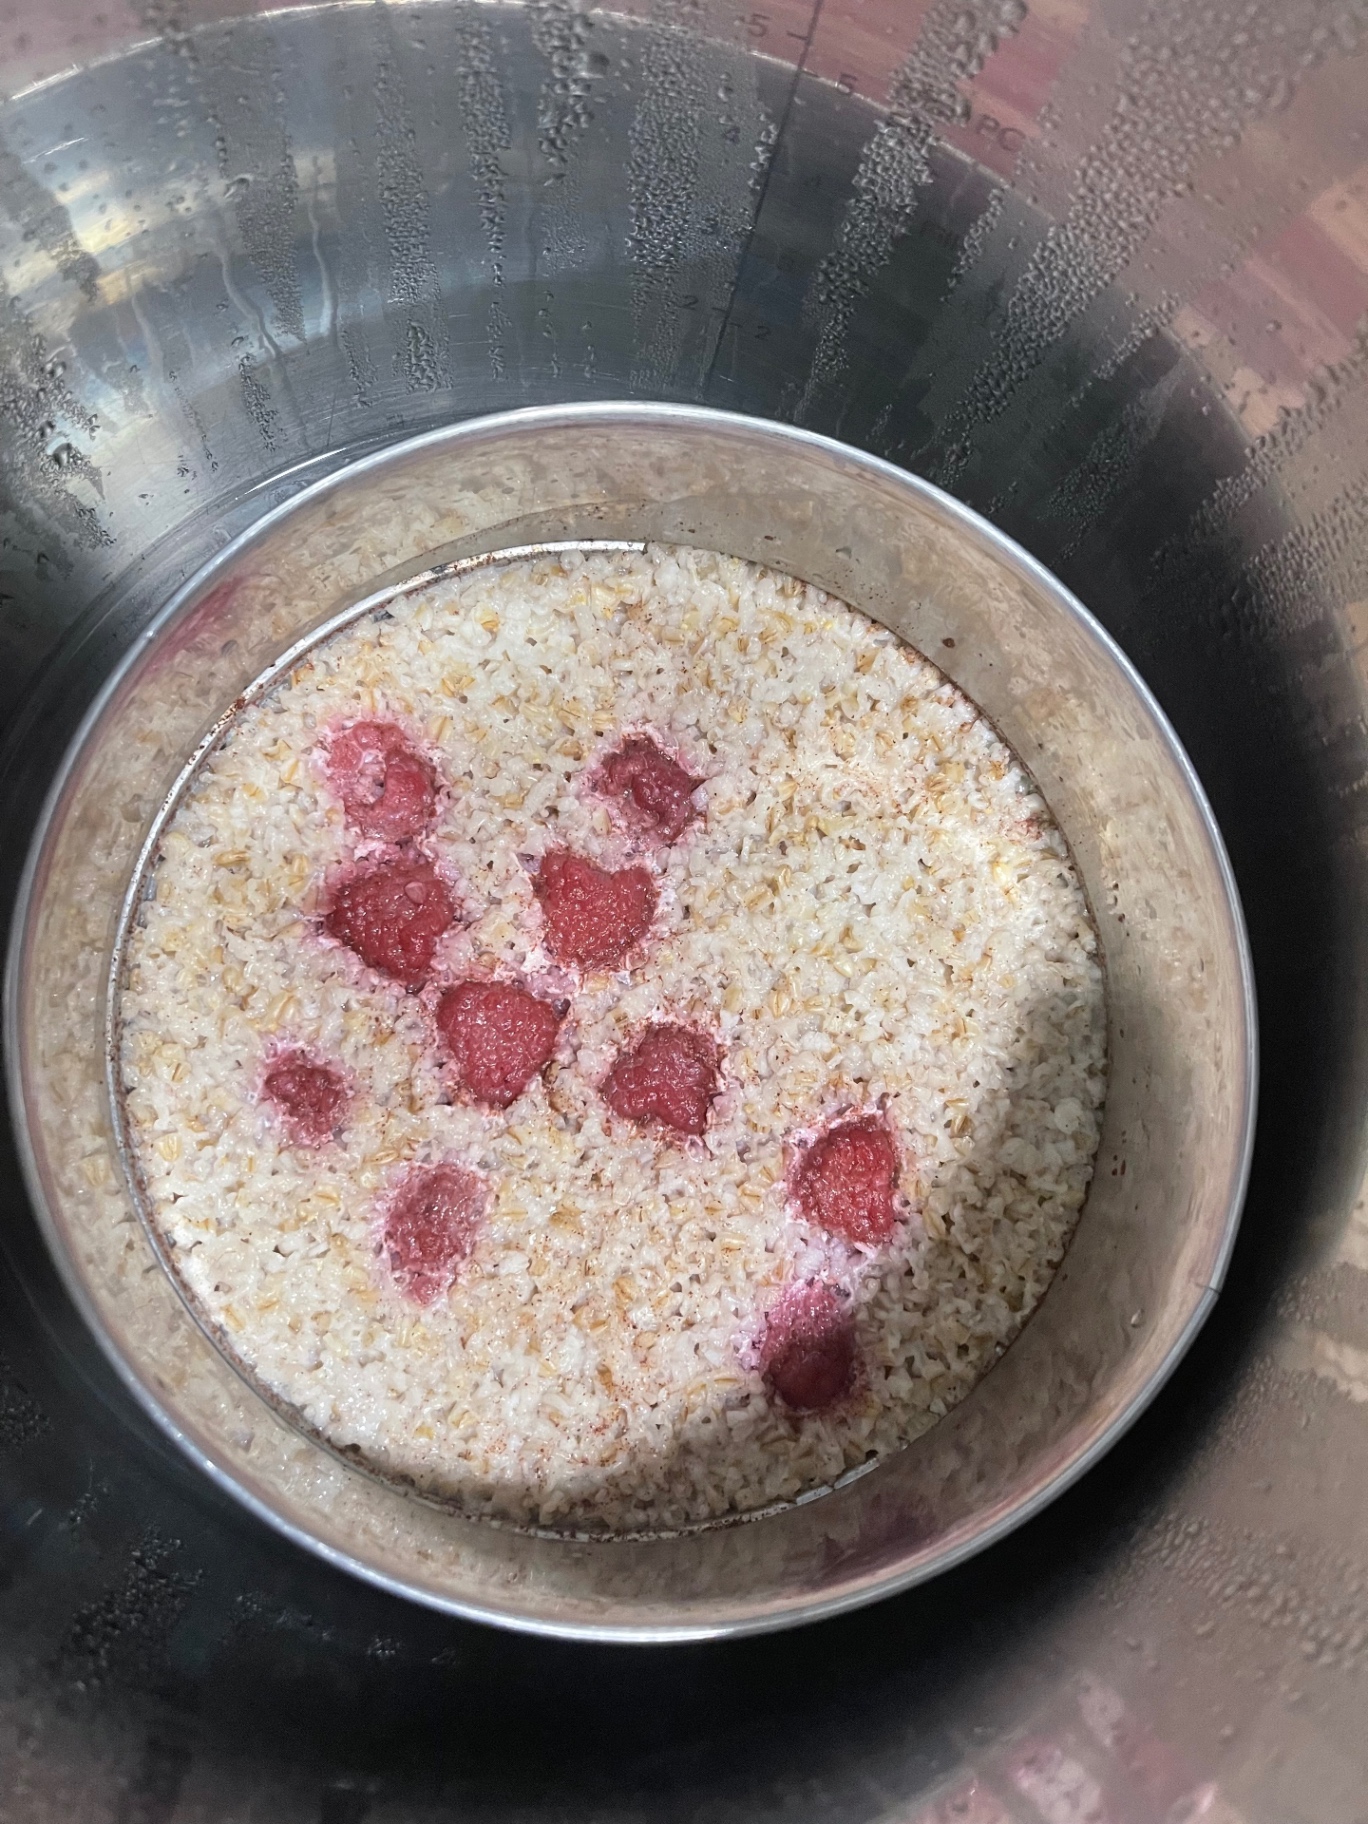 Oatmeal with raspberries and milk